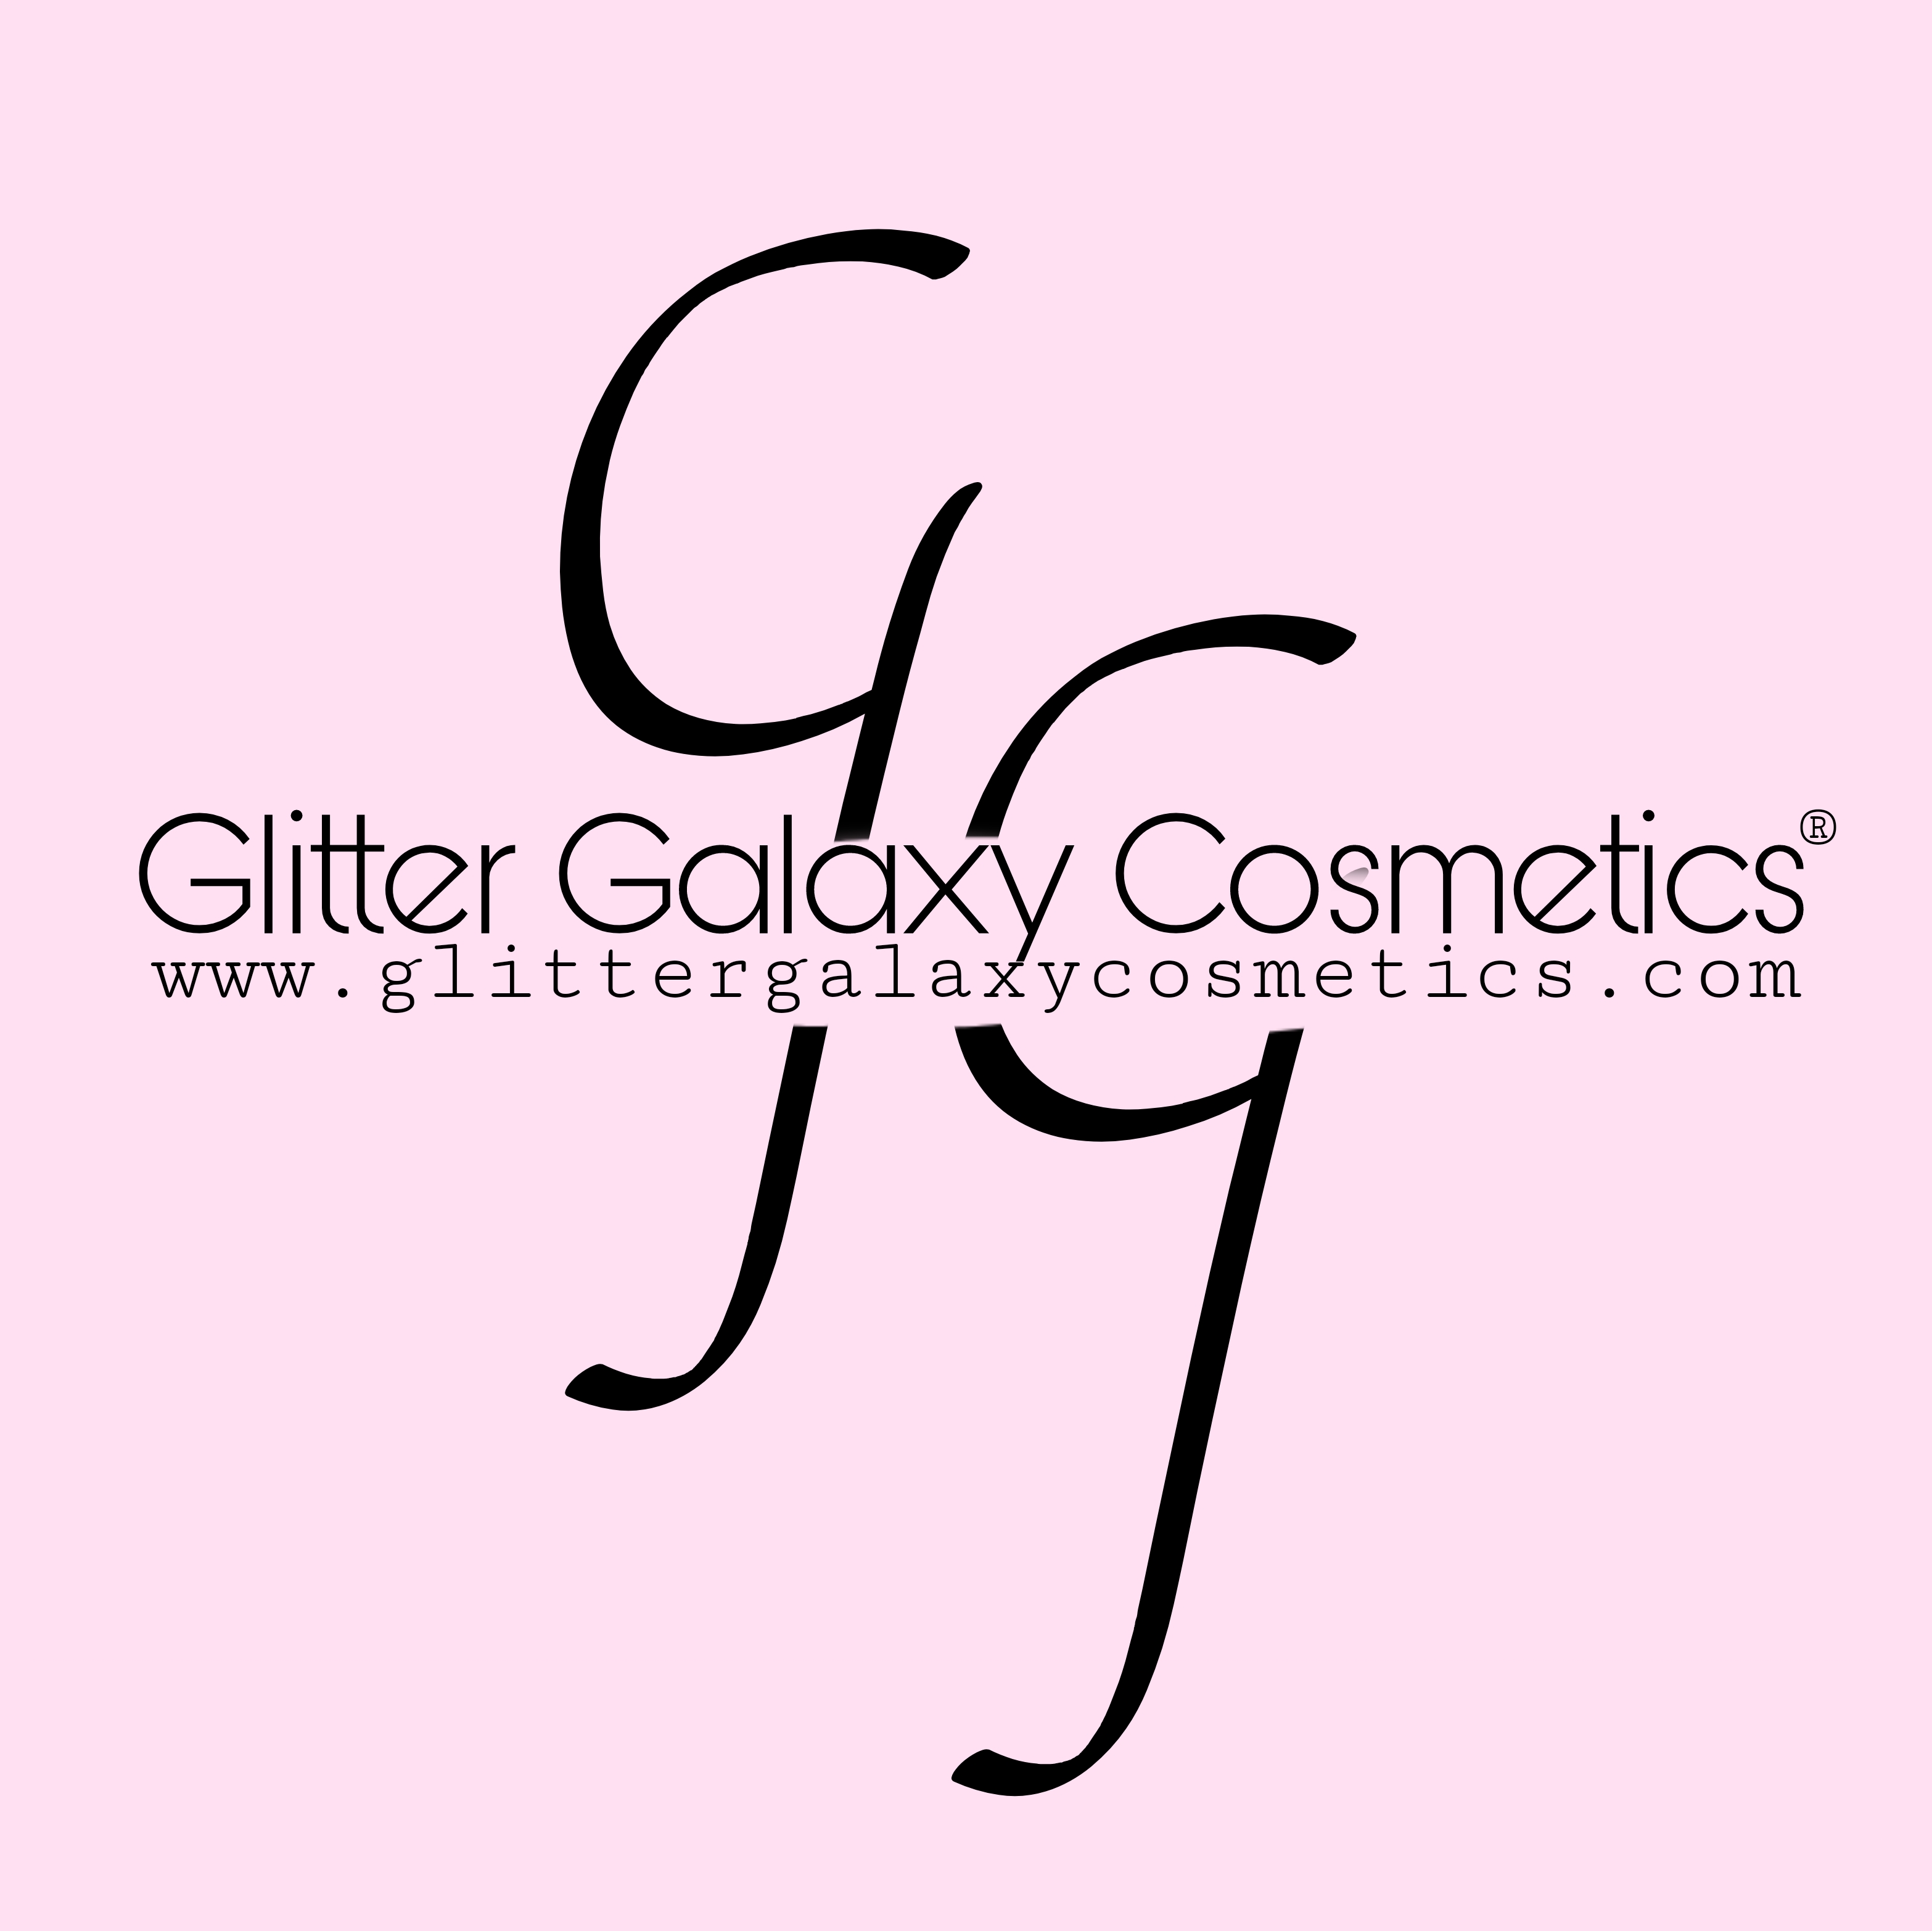 Glitter Galaxy Cosmetics